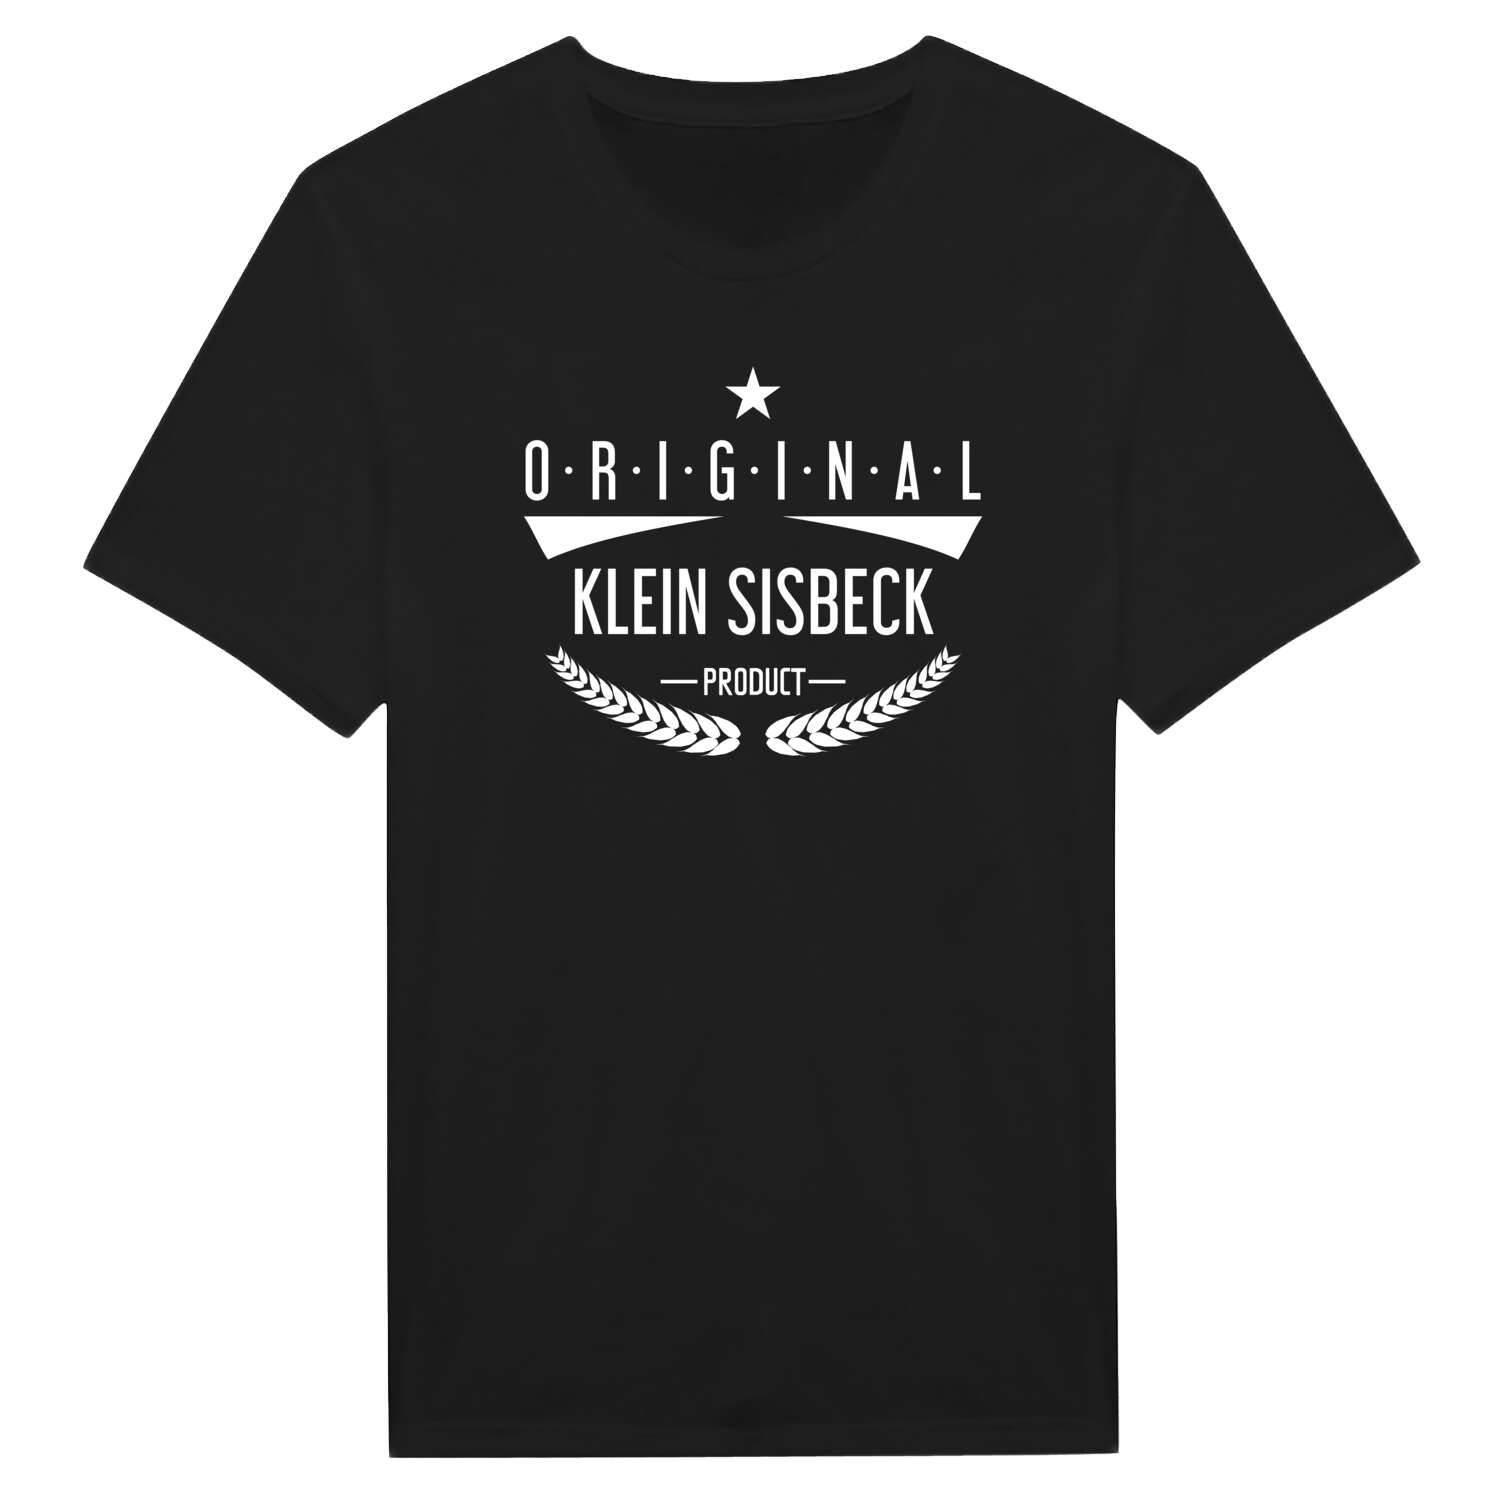 Klein Sisbeck T-Shirt »Original Product«